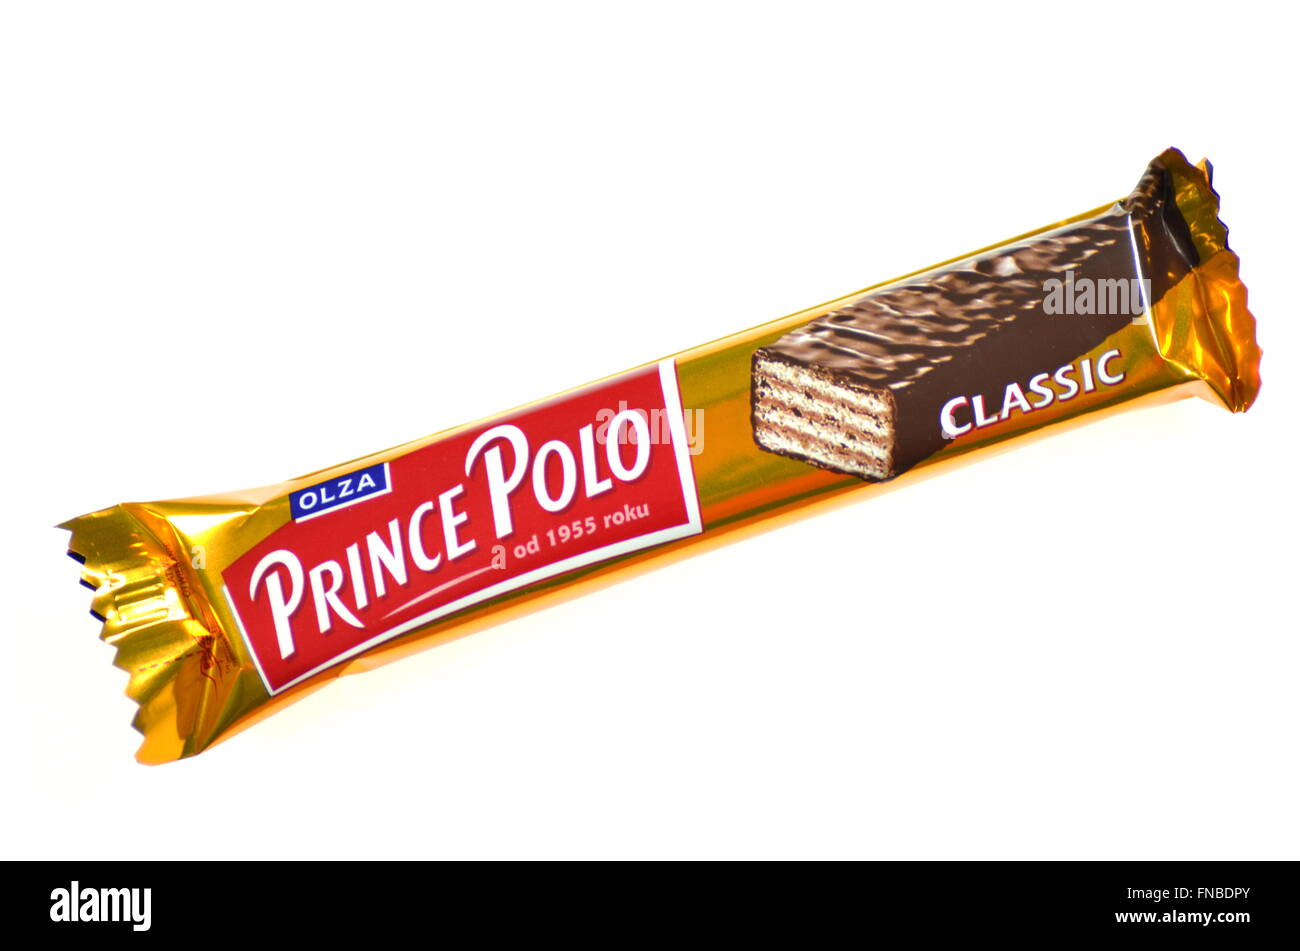 Prince Polo Bar chocolat isolé sur fond blanc Photo Stock - Alamy